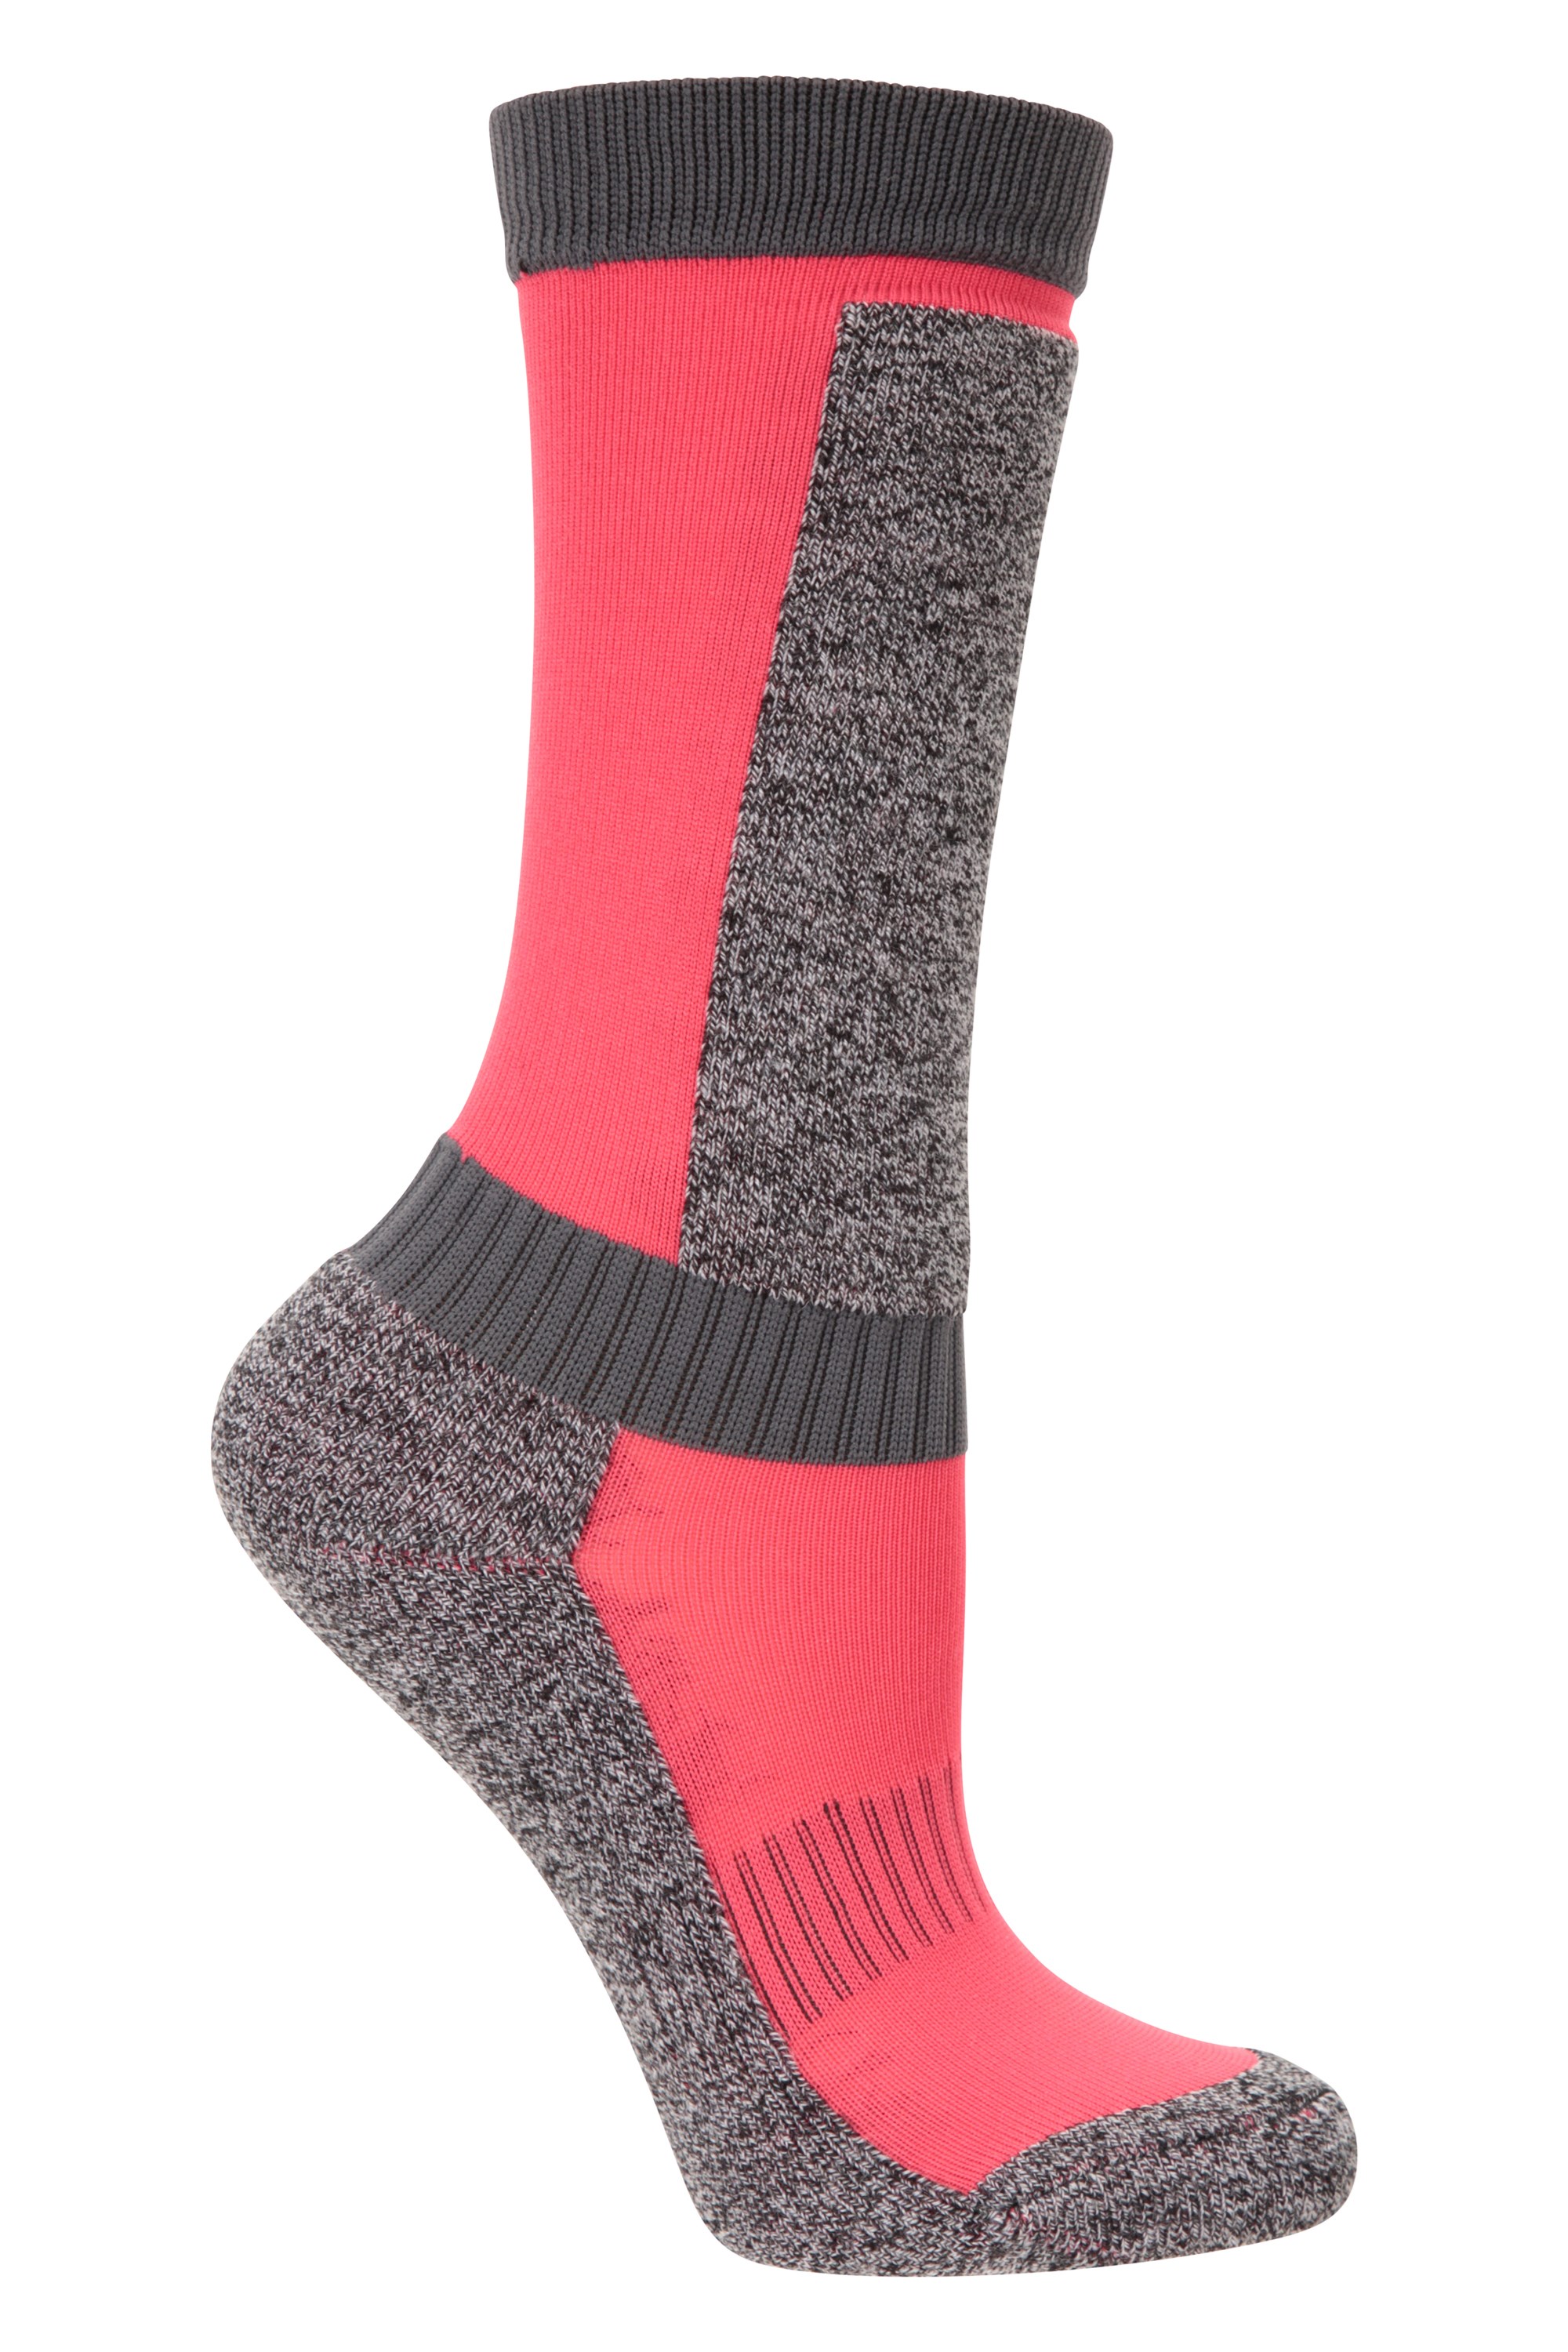 Merino Technical Kids Ski Socks - Pink